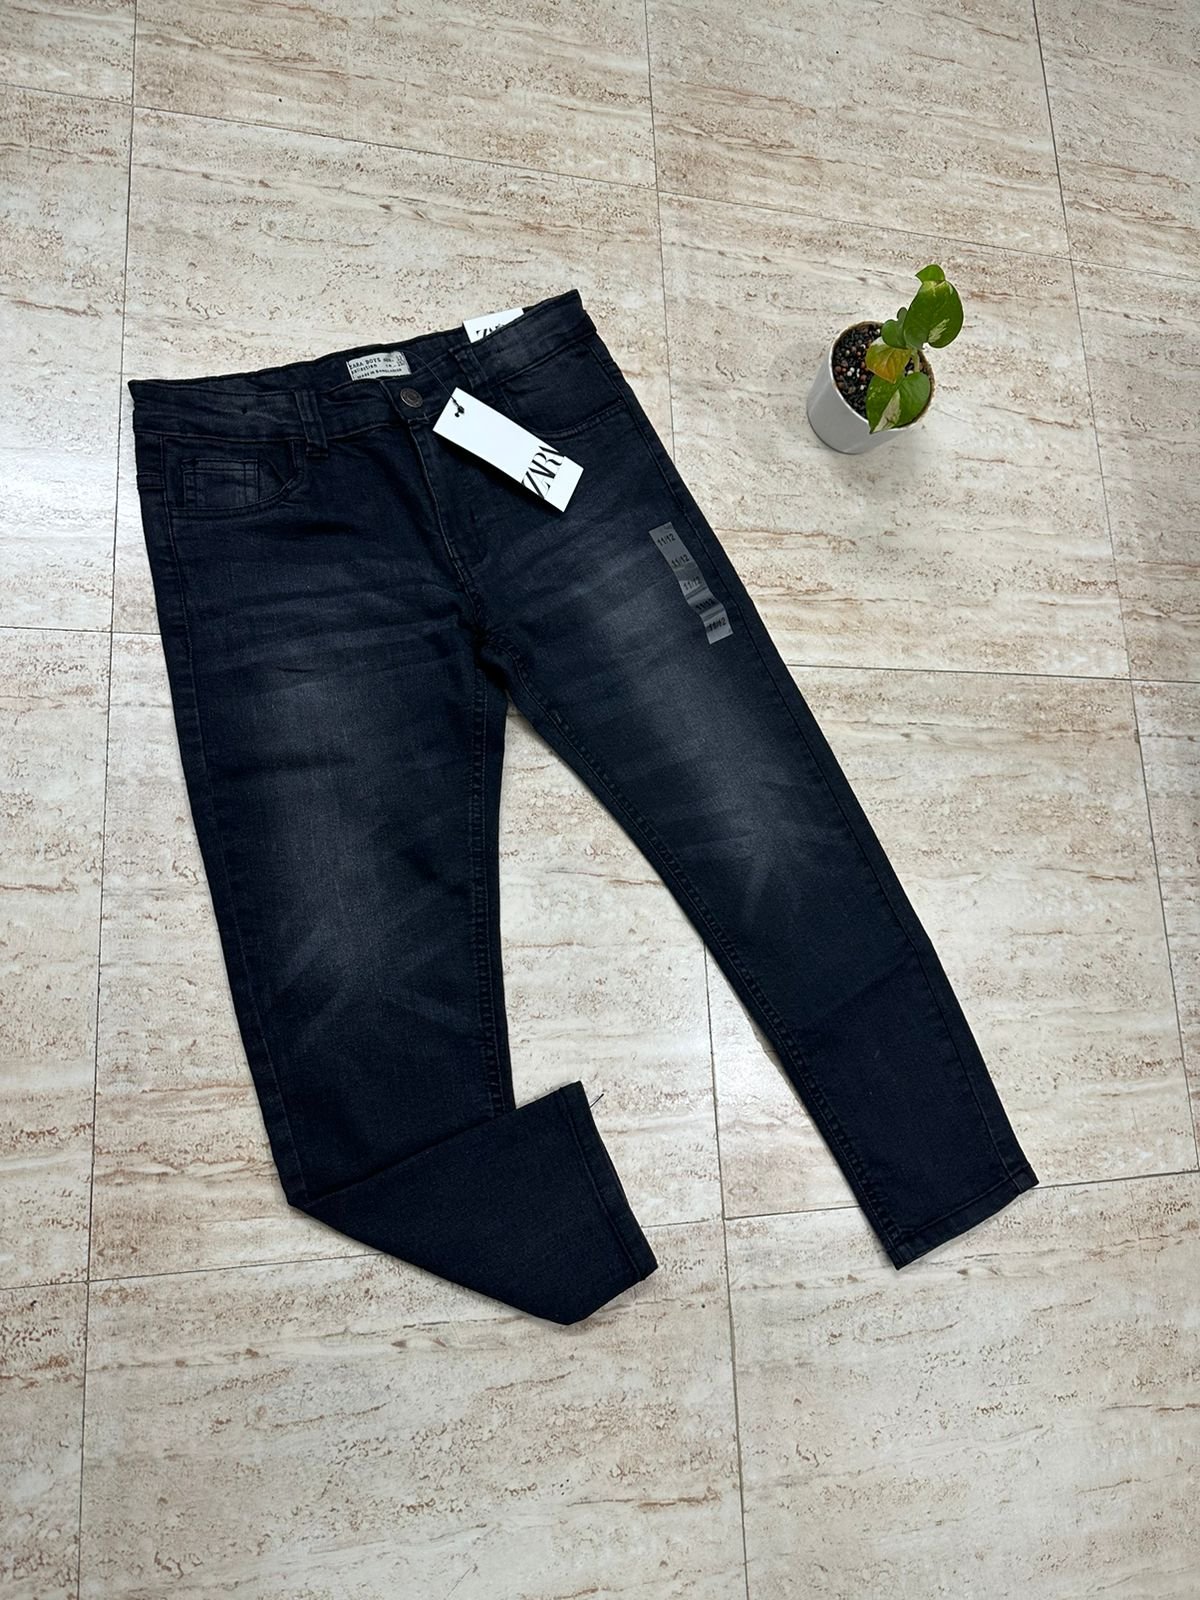 Buy NK Shopping Kids Boys Elastic Waist Denim Jeans Pants (3-4 Years, Blue)  at Amazon.in